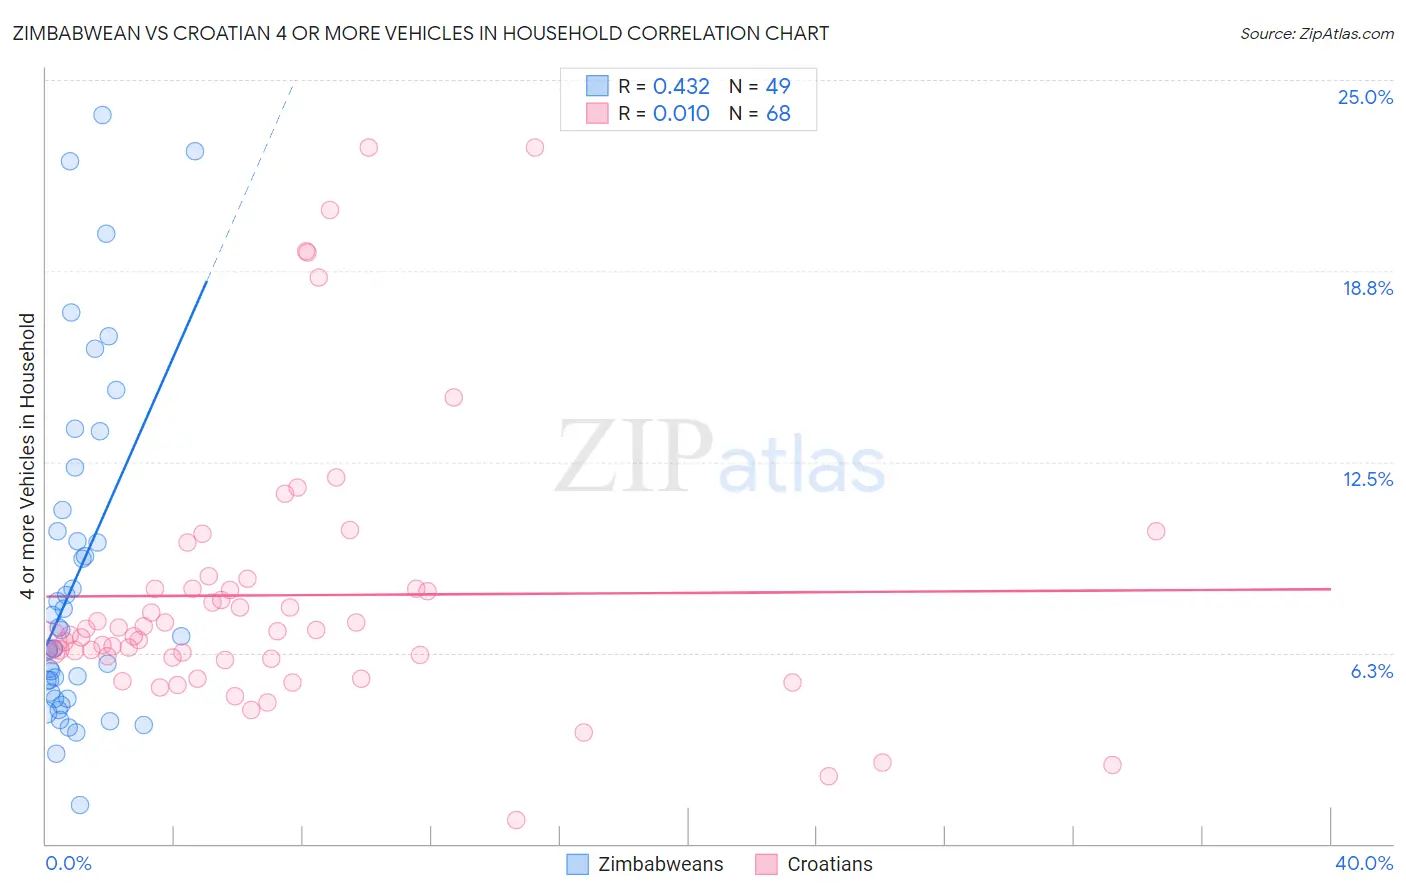 Zimbabwean vs Croatian 4 or more Vehicles in Household